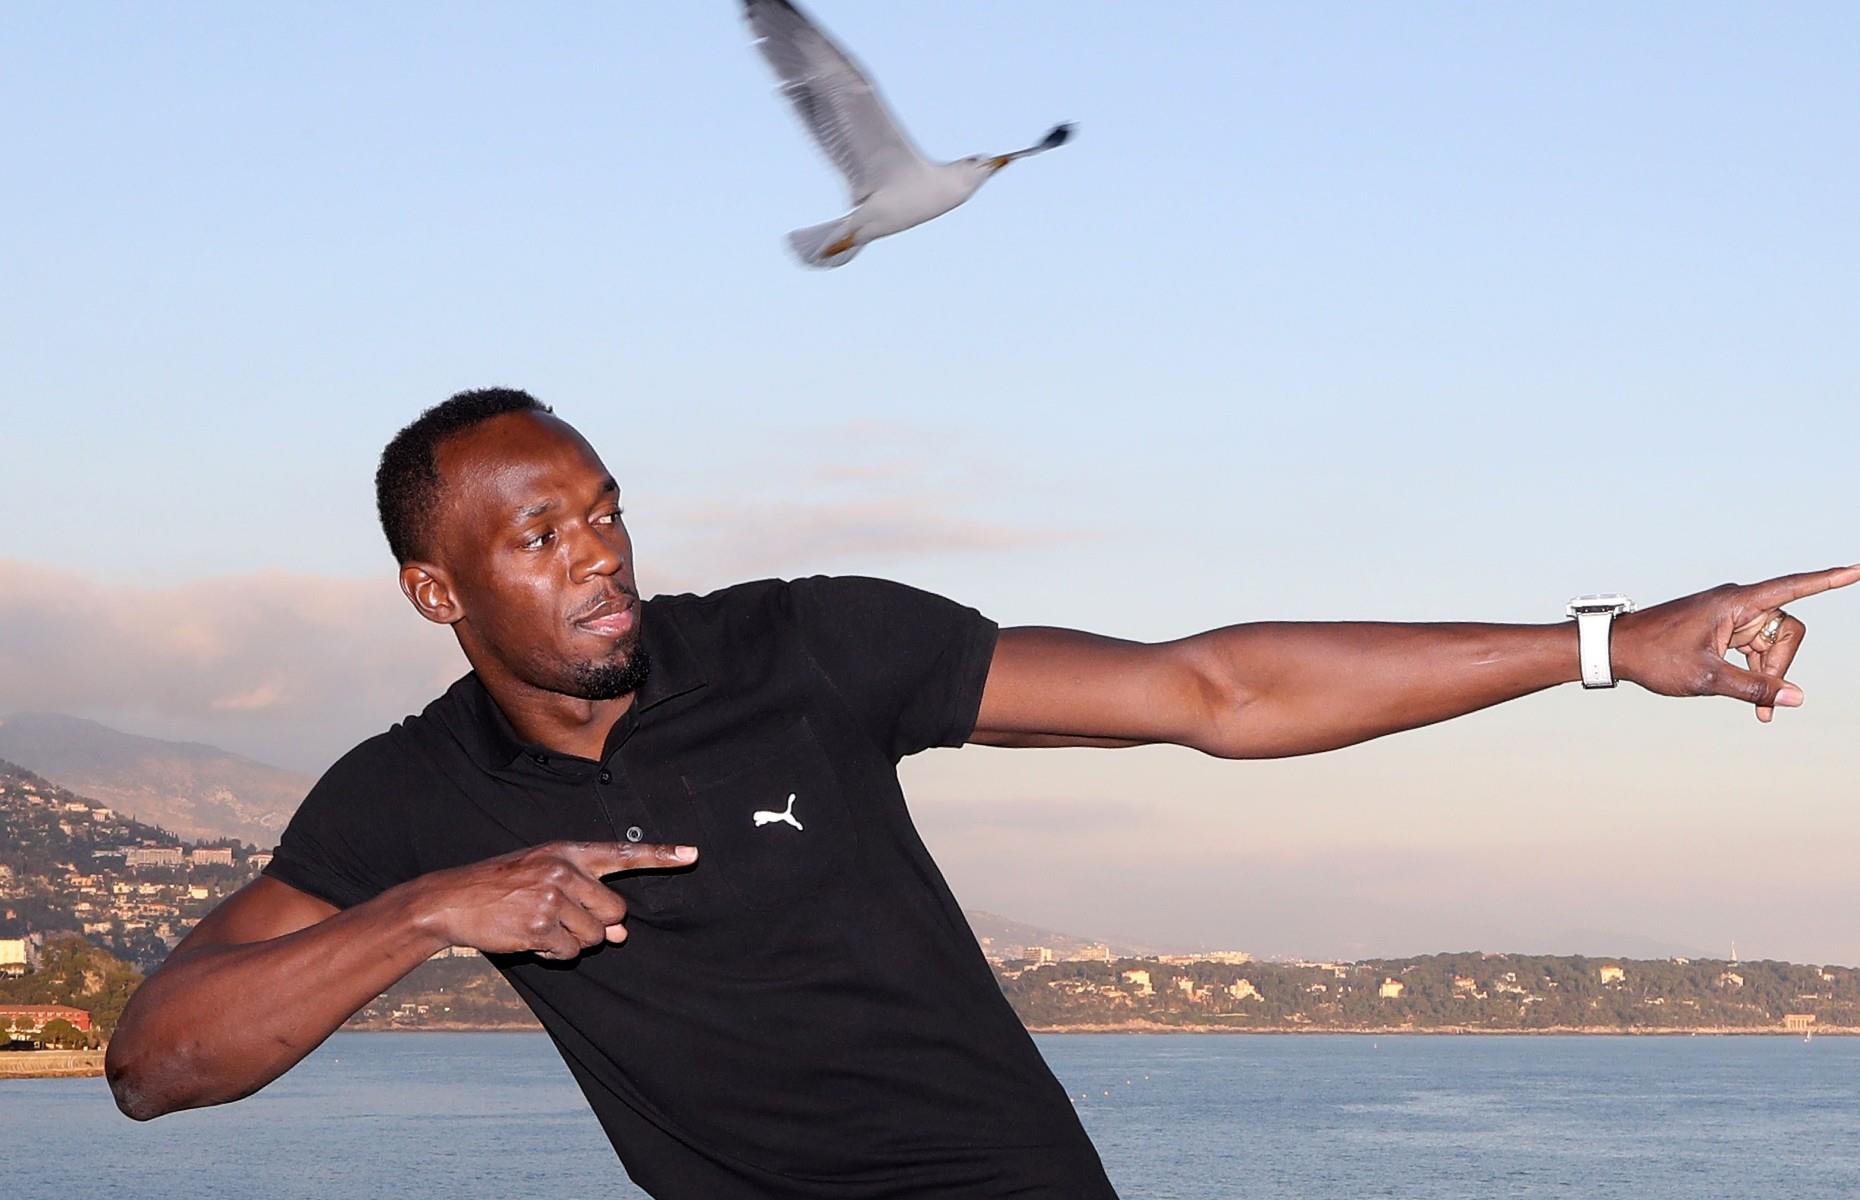 Usain Bolt's victory pose